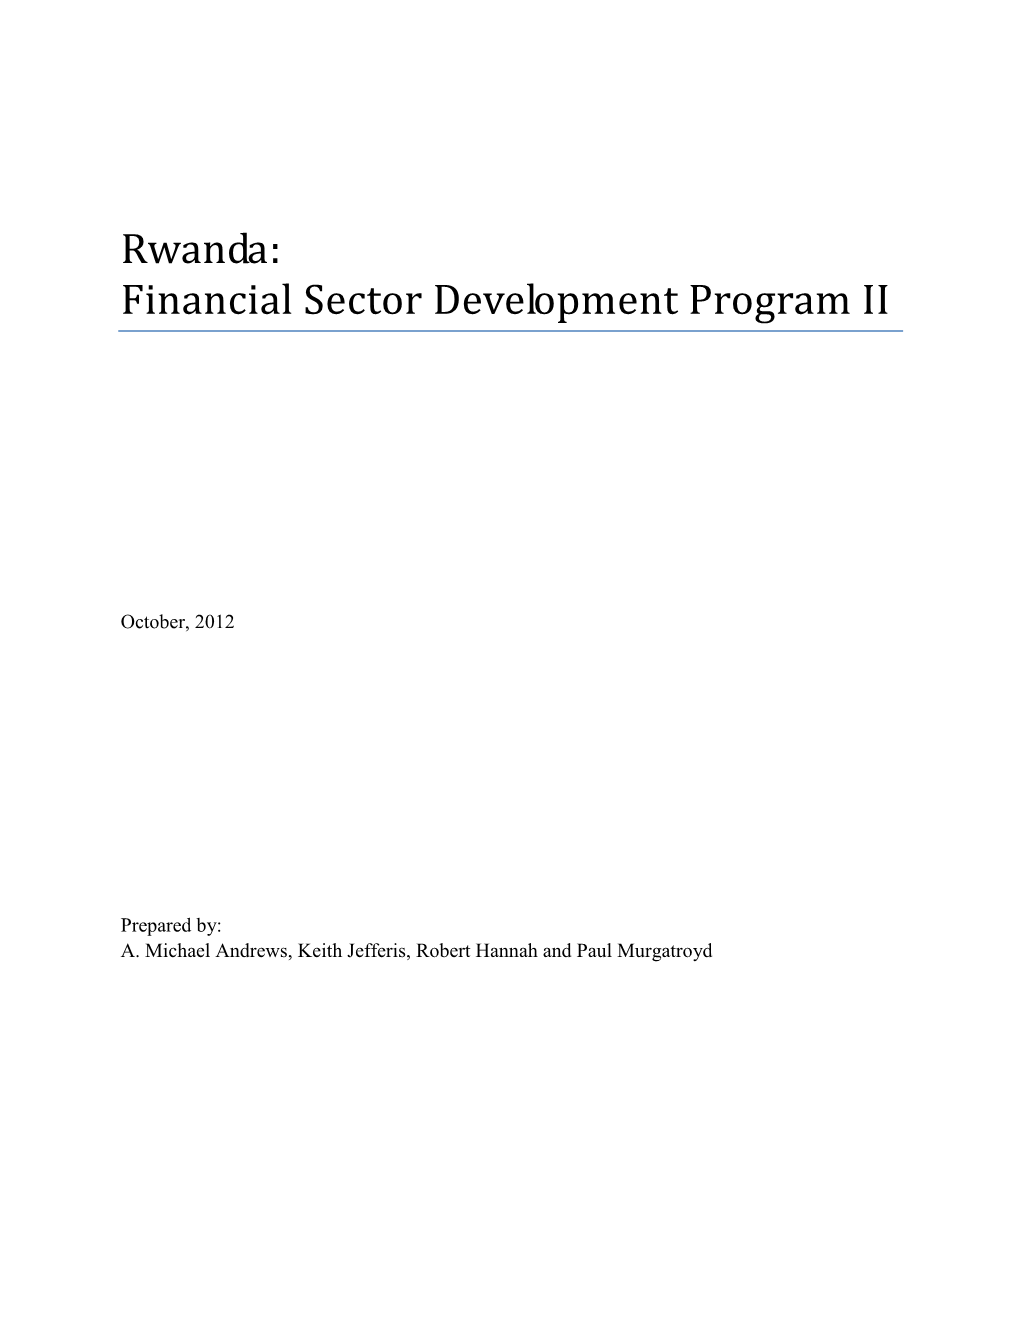 Rwanda Financial Sector Development Program II.Pdf